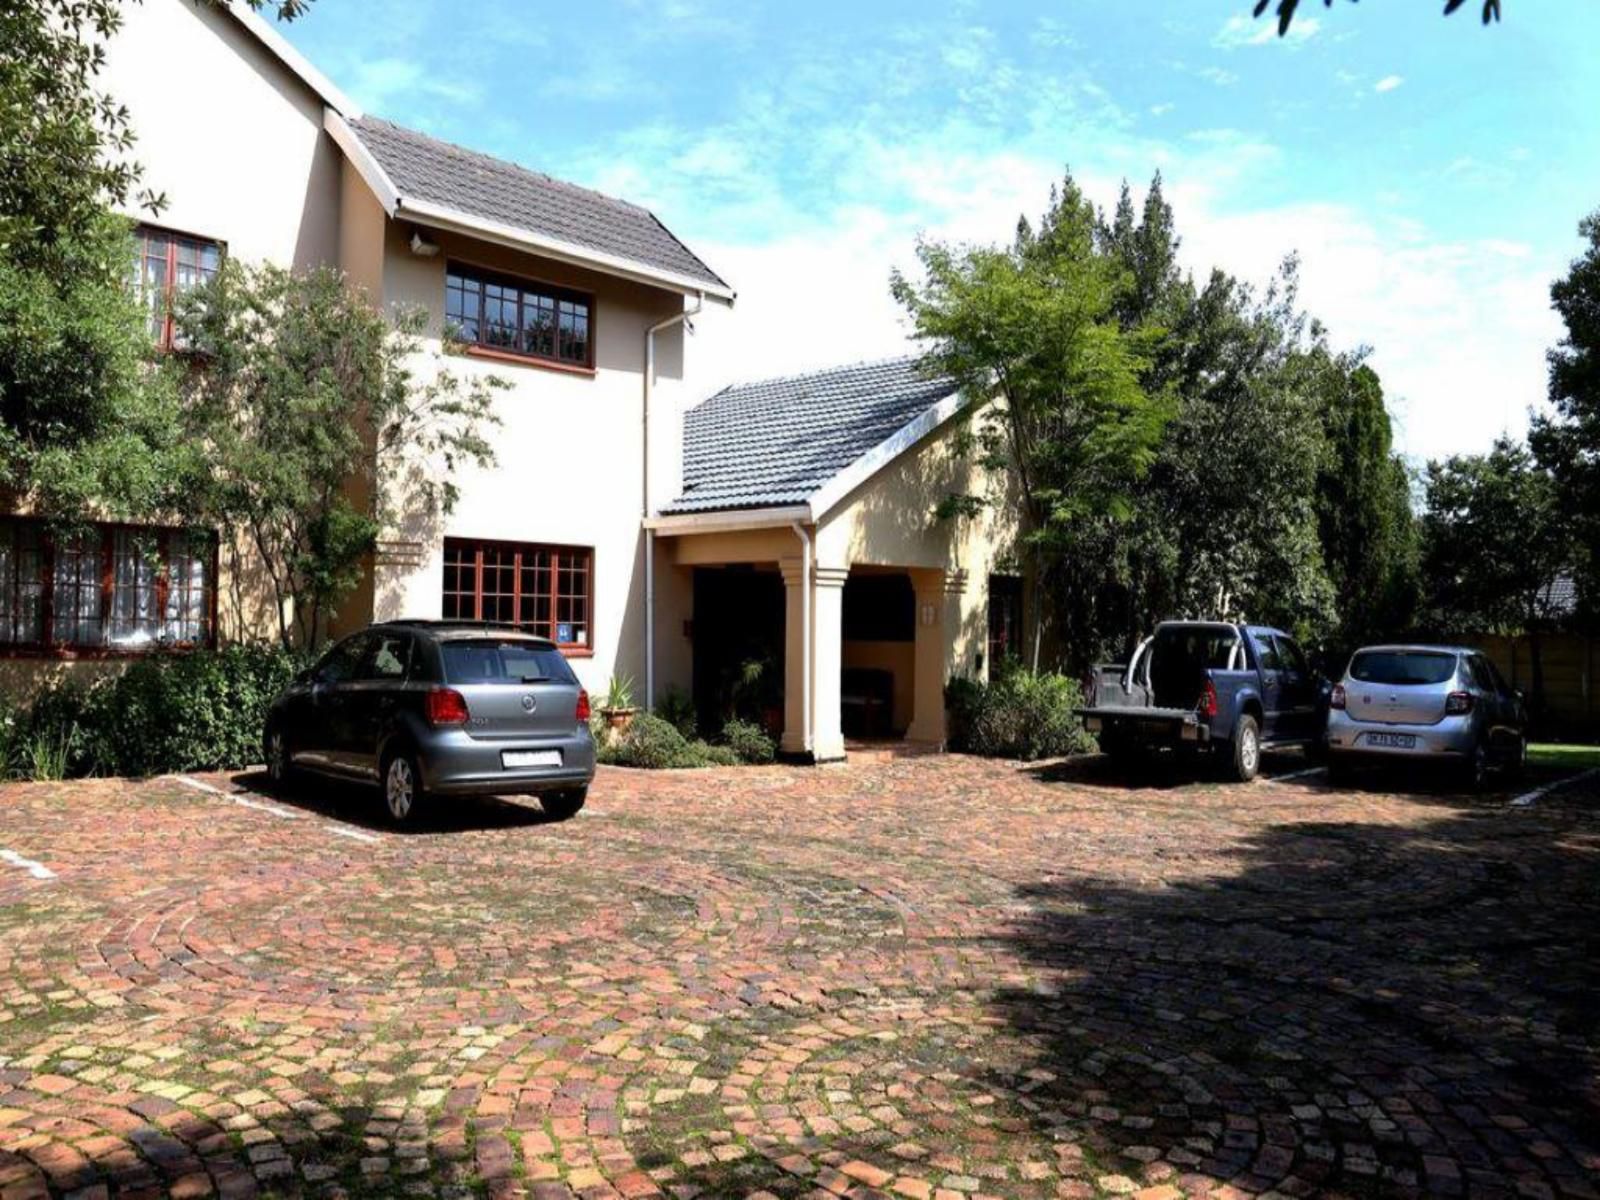 Morulana Kempton Park Johannesburg Gauteng South Africa House, Building, Architecture, Car, Vehicle